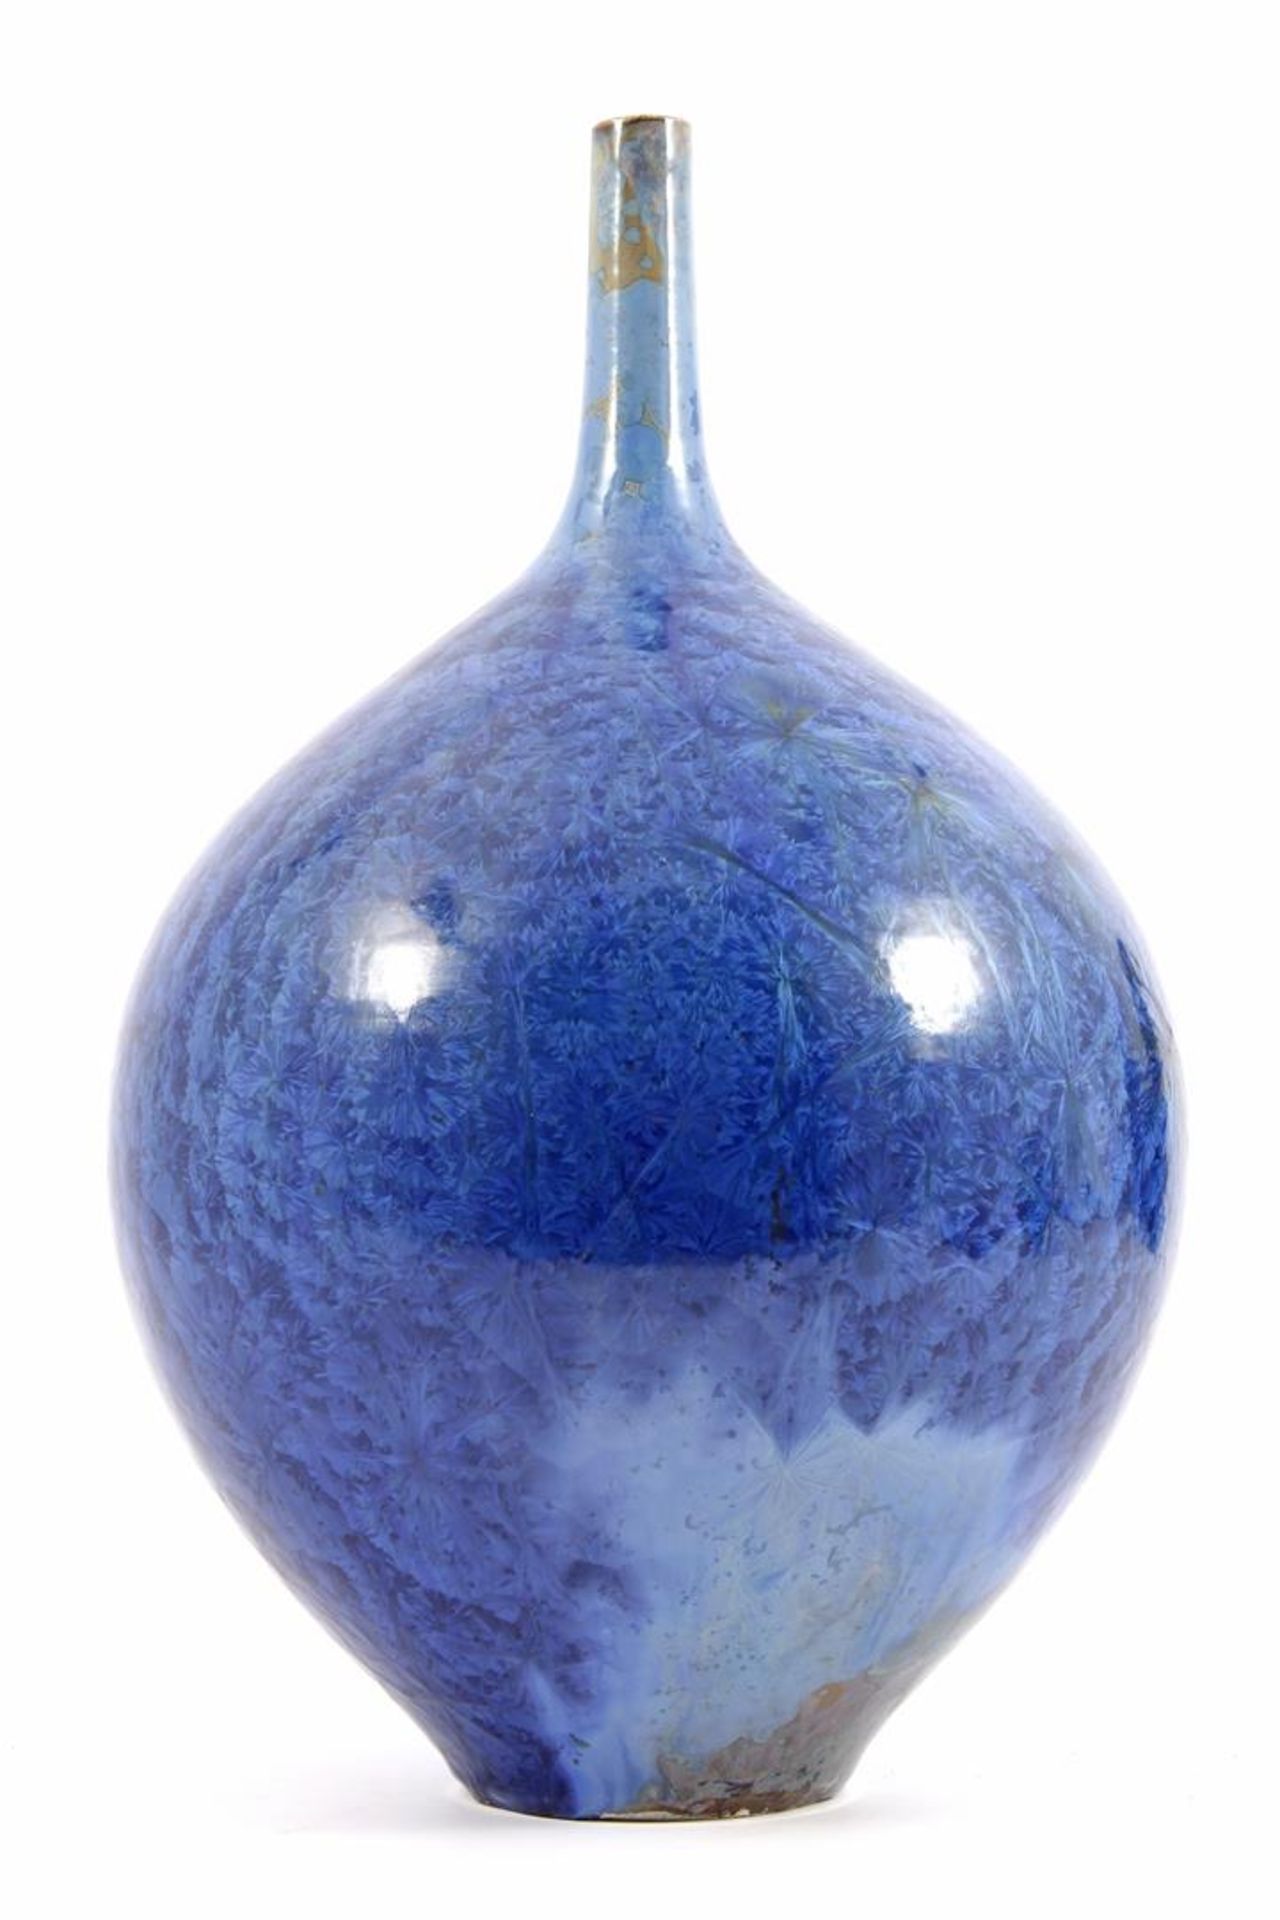 Monogram FT or FR, ceramic vase with blue crystal glaze 38 cm high, 24 cm diameter